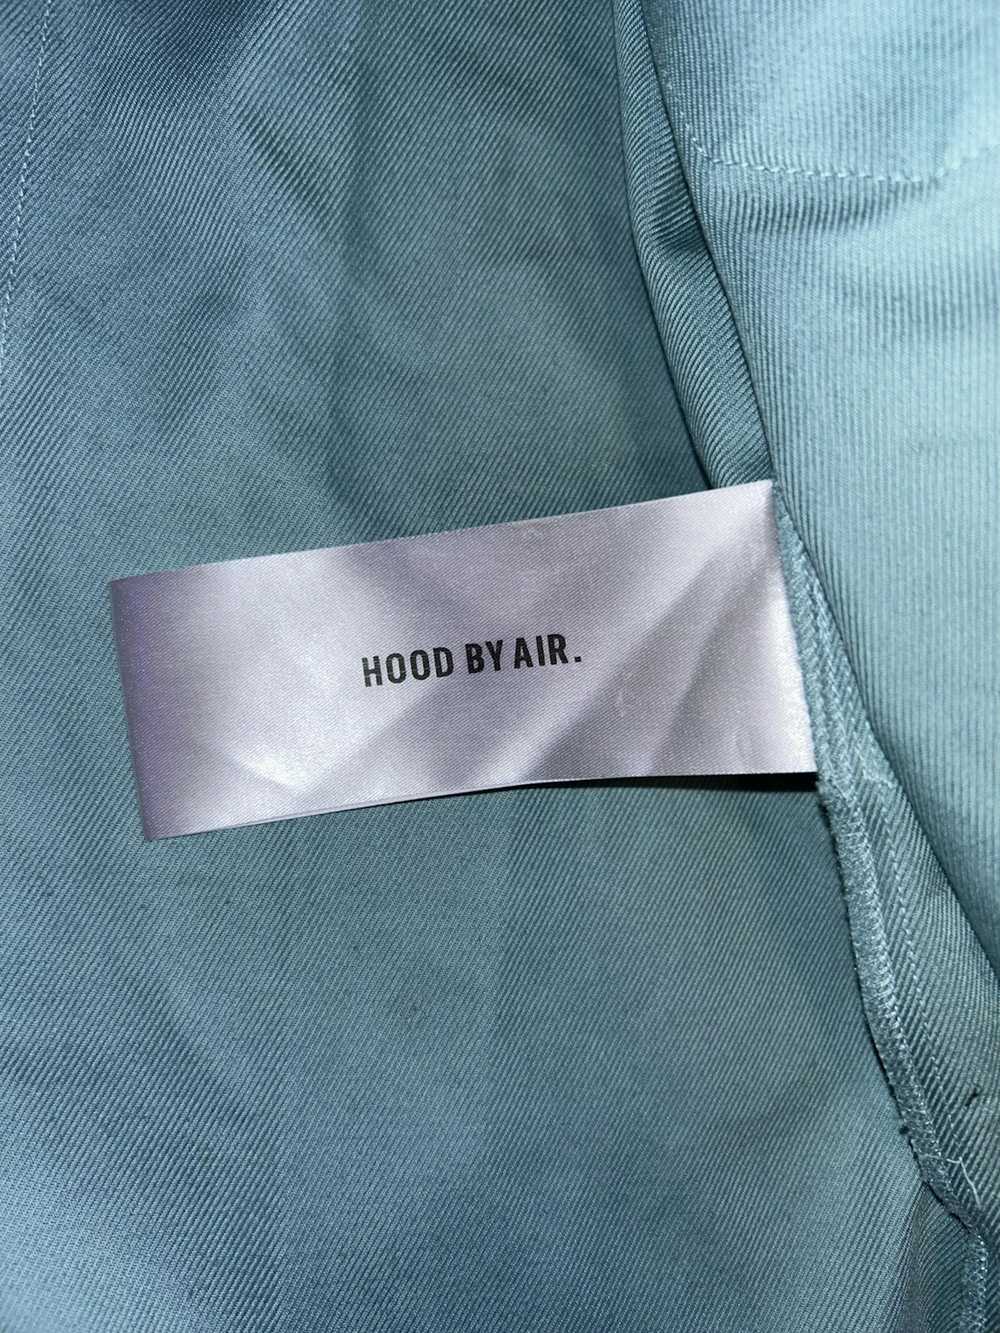 Hood By Air Hood by Air “Veteran” Shirt - image 7